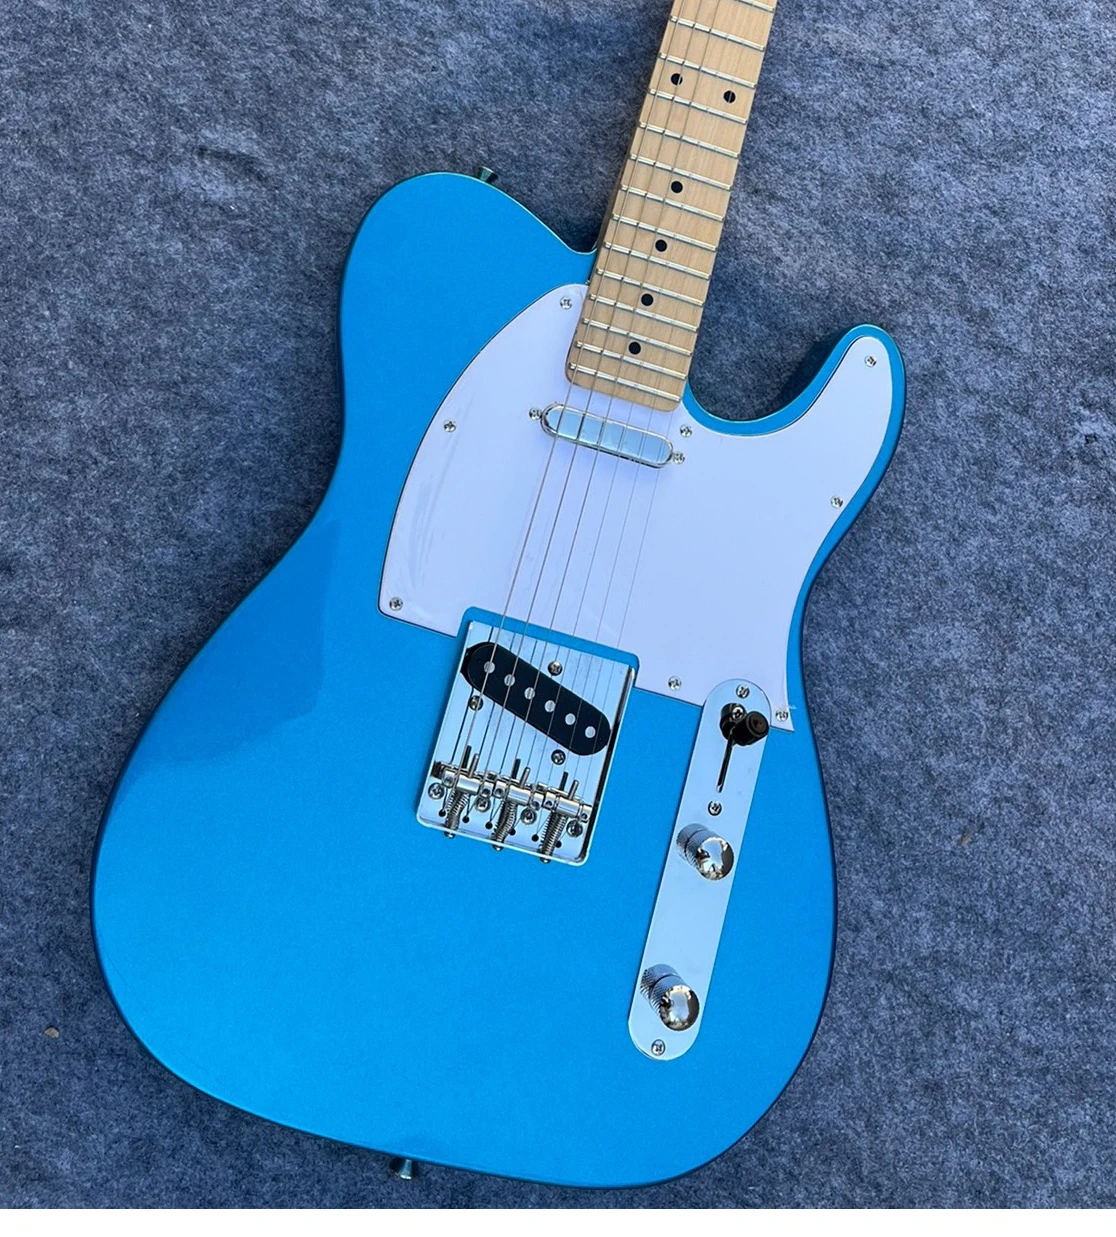 

Custom Shape 6 Strings Handmade High Qulaity Tele Electric Guitar Mentalic Blue TL Guitar S Switch&Pickup Canadian Maple Neck